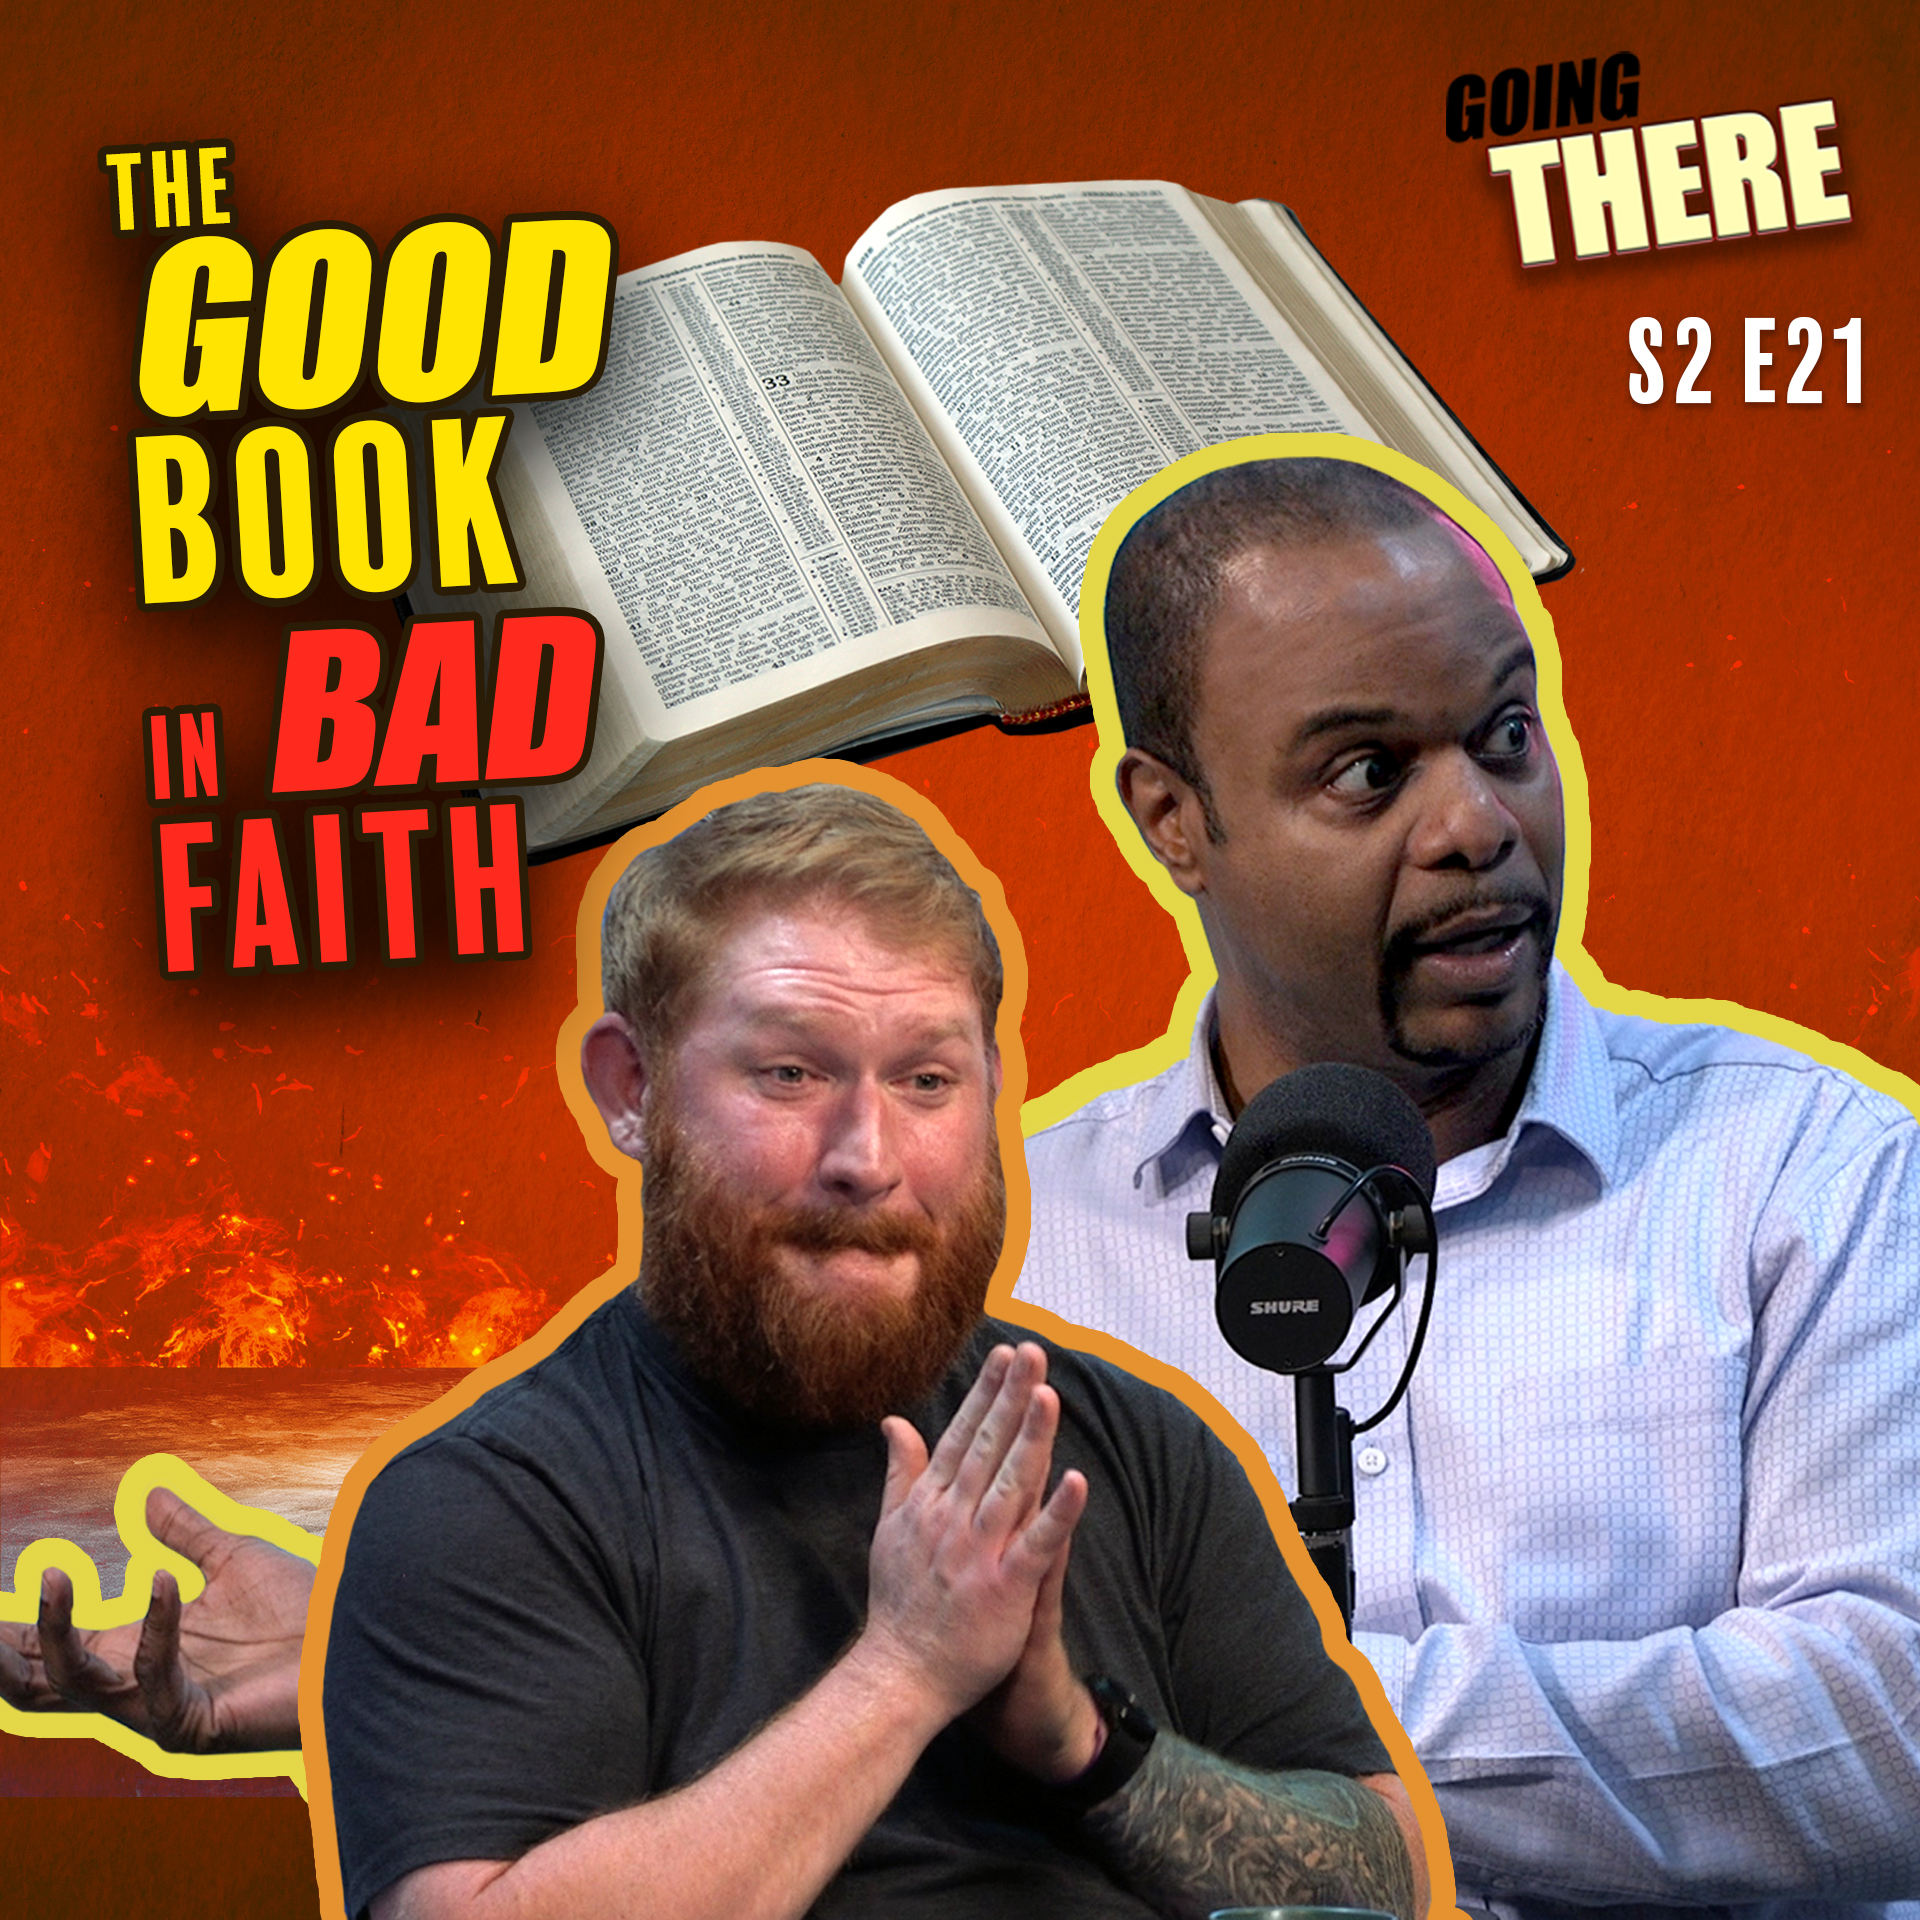 Using the Good Book in Bad Faith